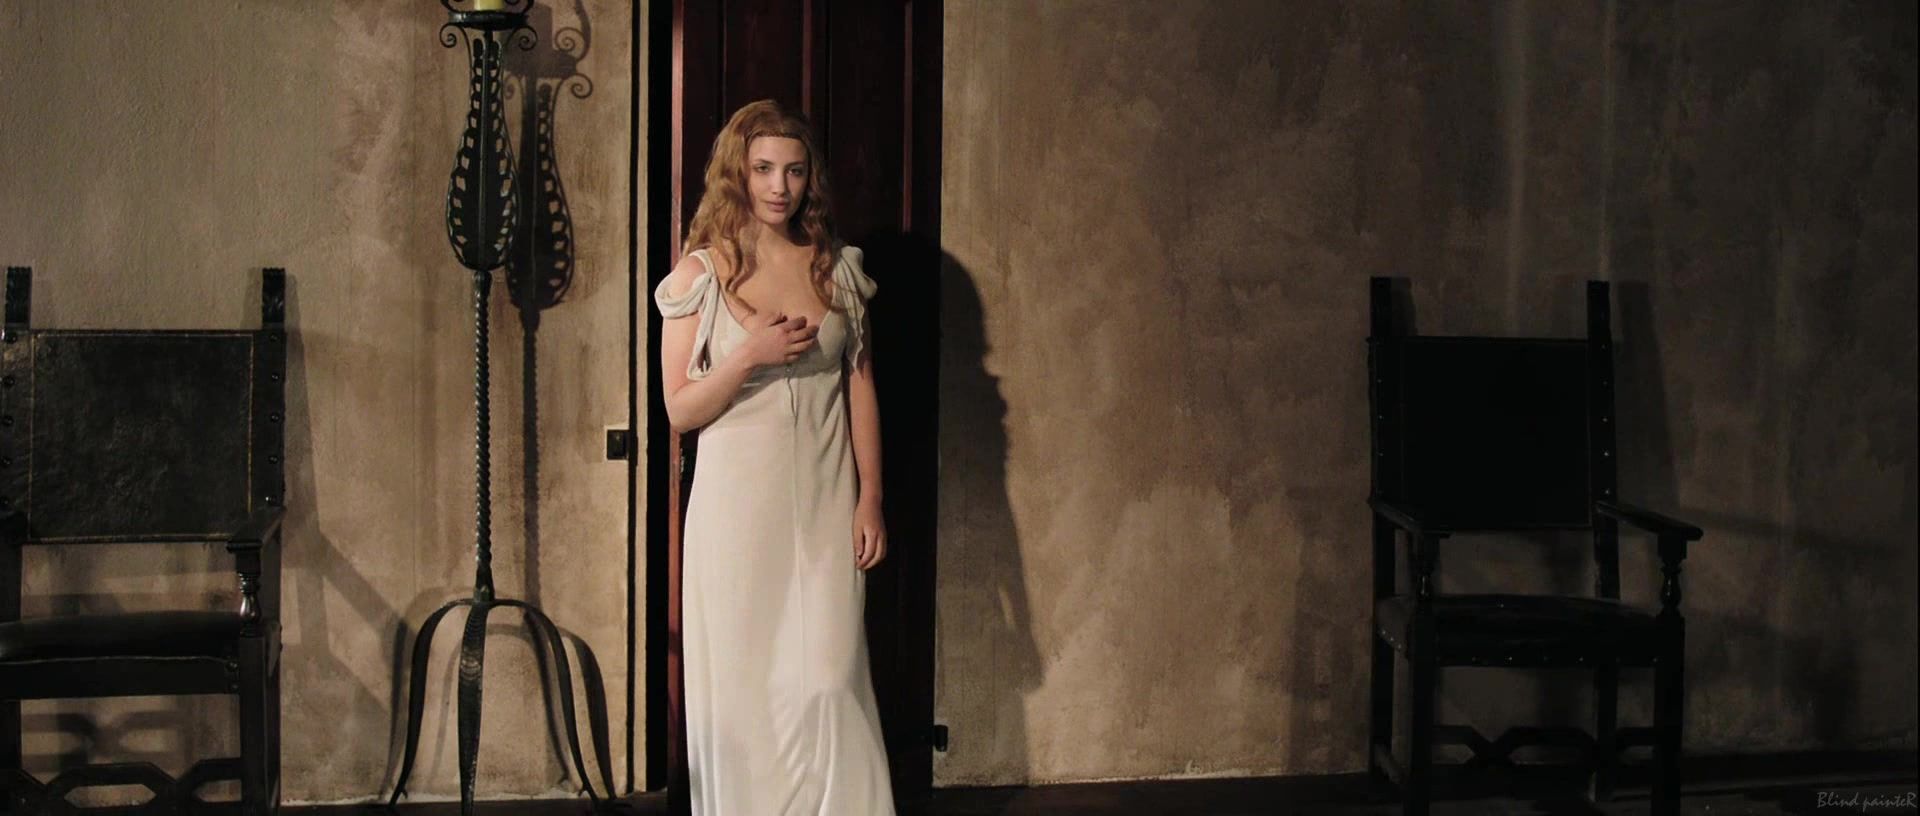 Dildo Miriam Giovanelli nude - Dracula (2012) Pjorn